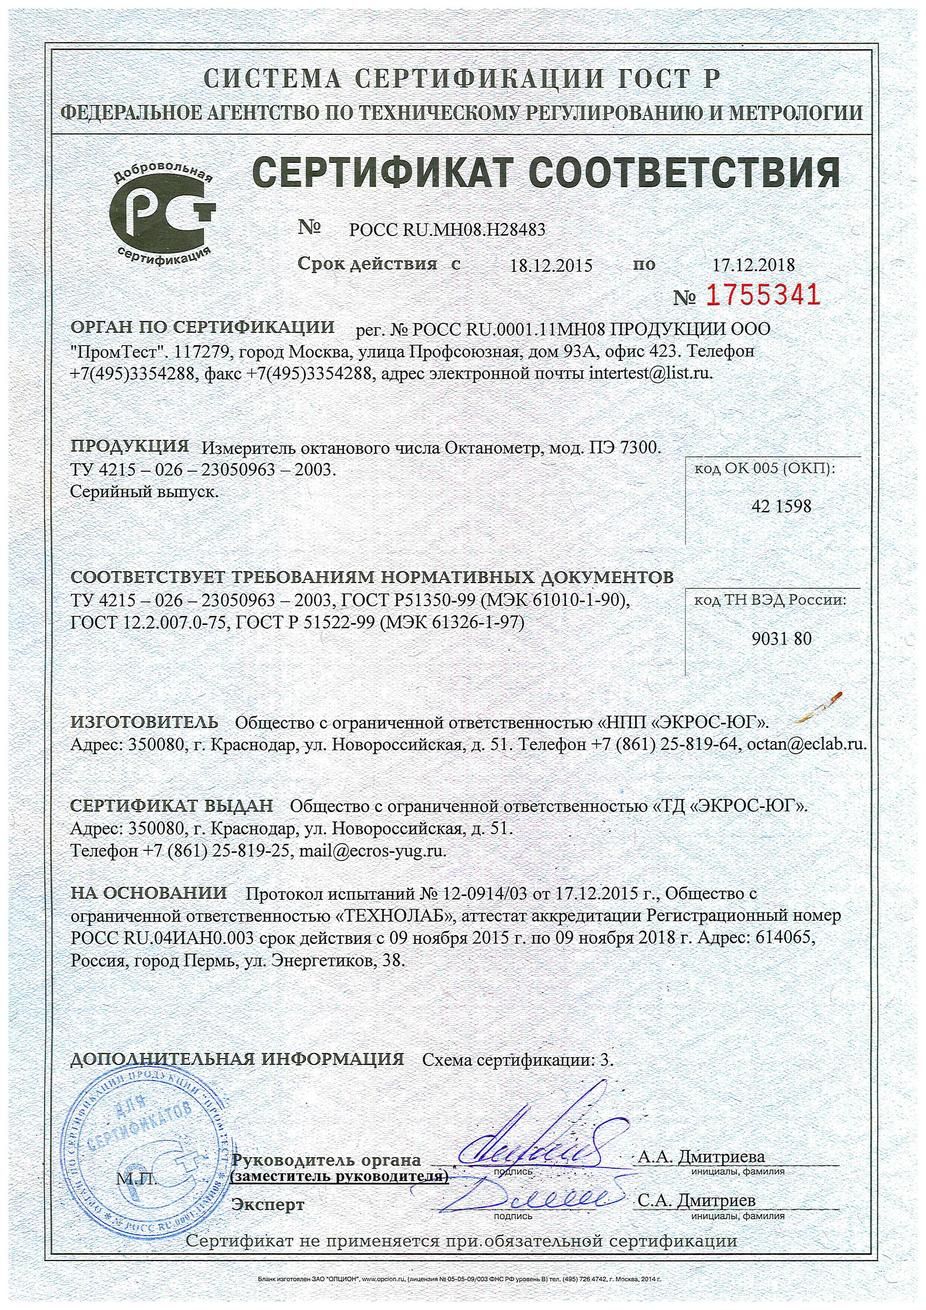 Сертификат соответствия на октанометр